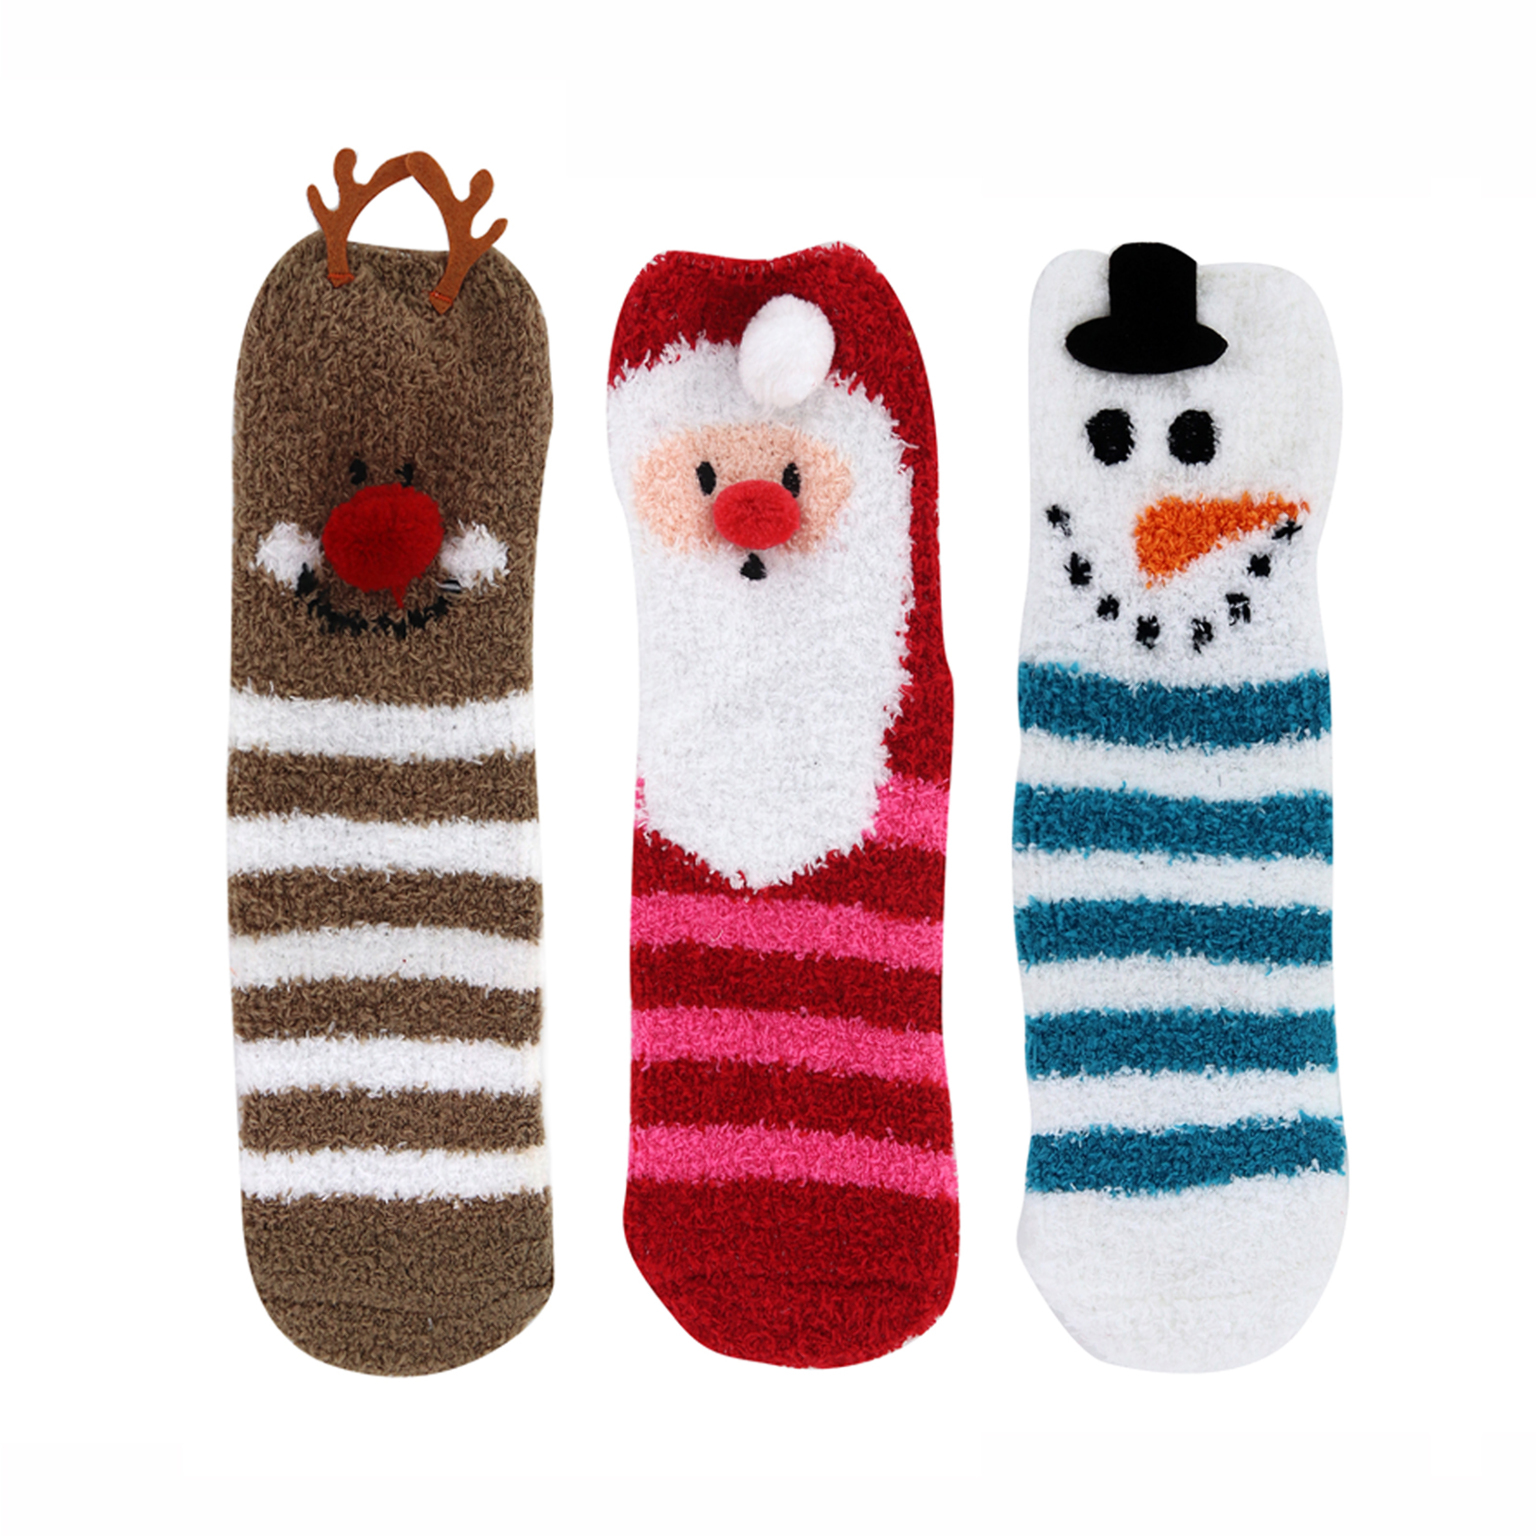 Christmas Fuzzy Socks - 3 Styles